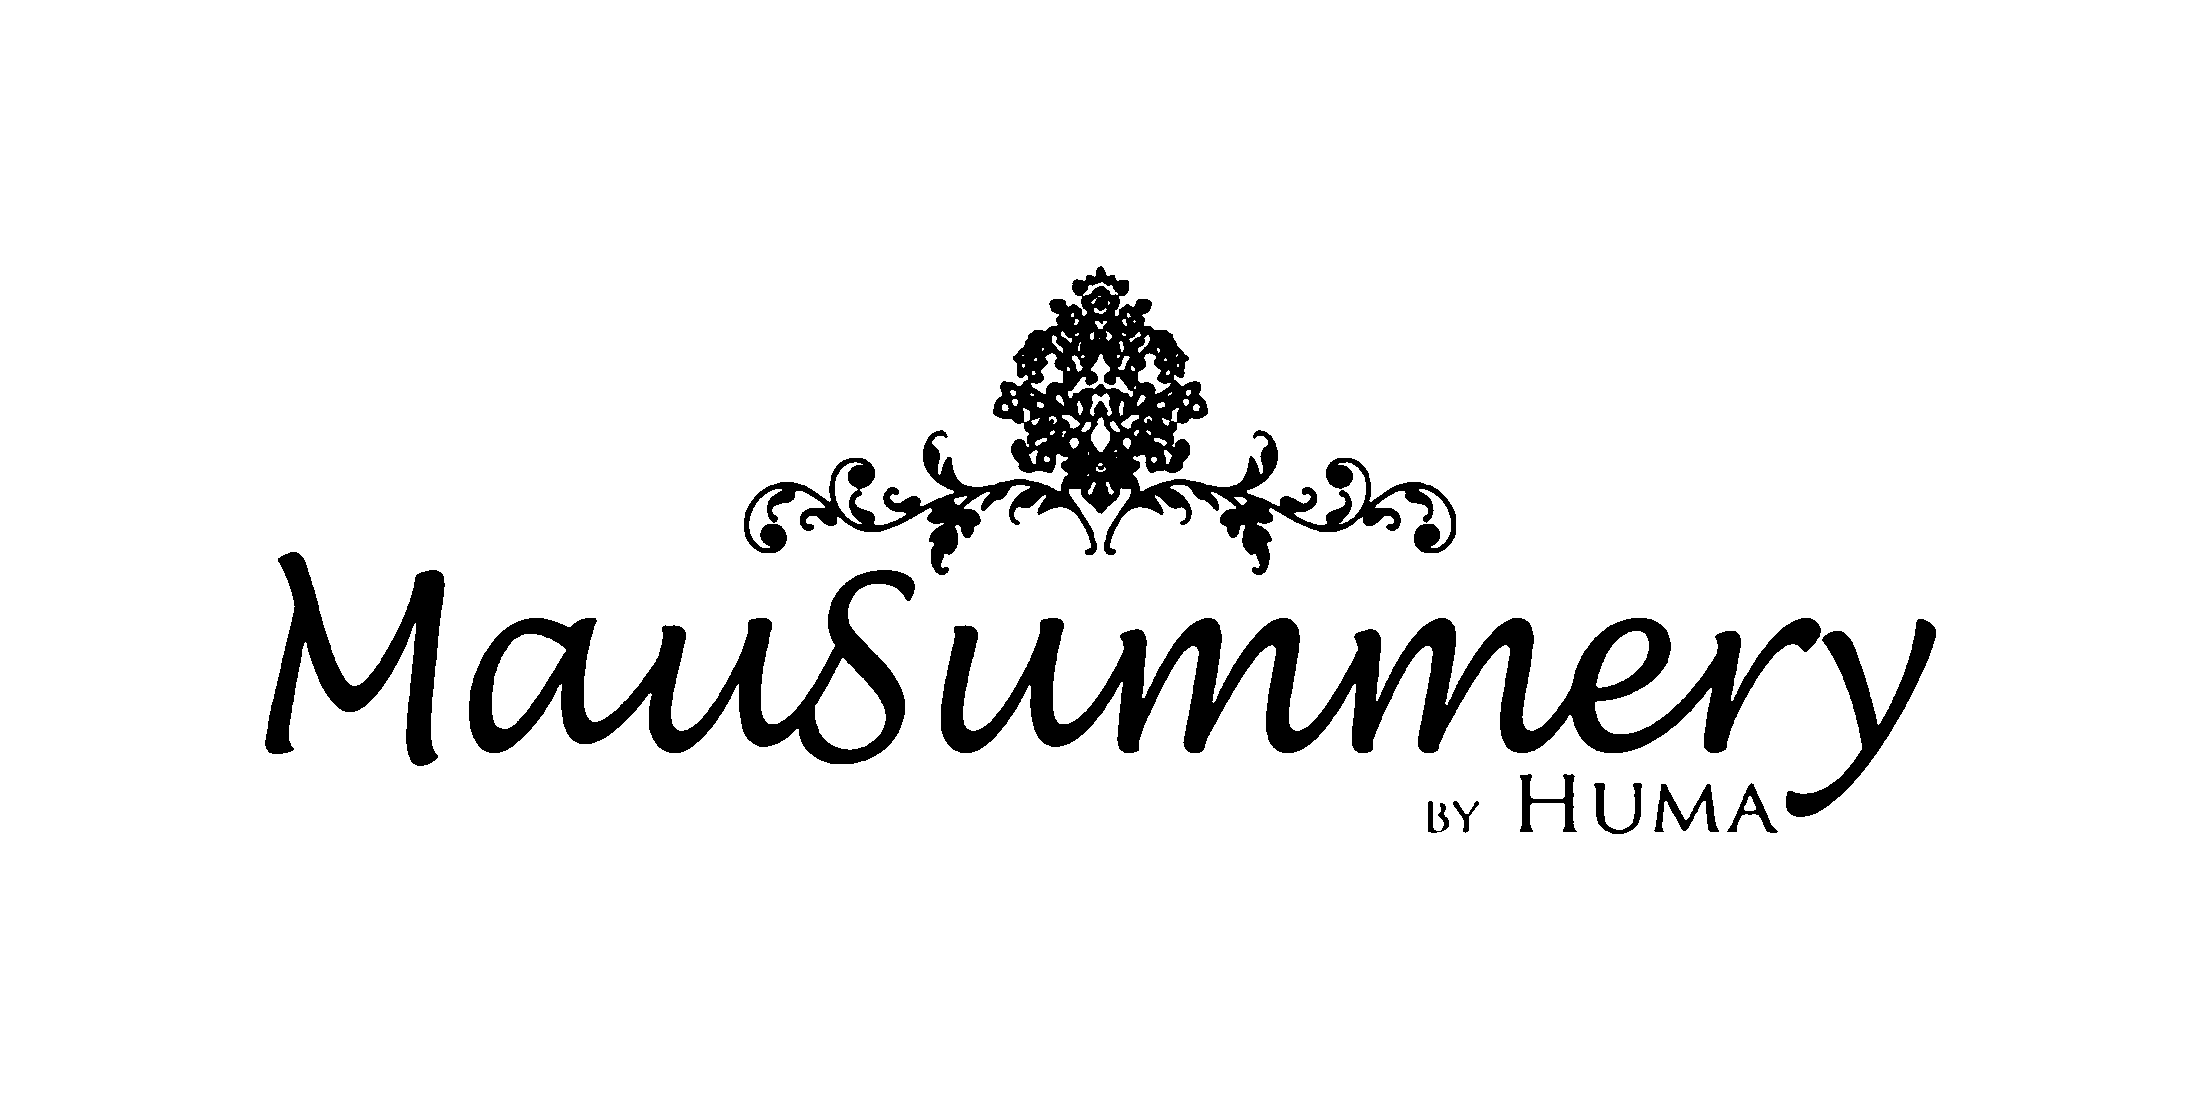 mausummery-by-huma-logo